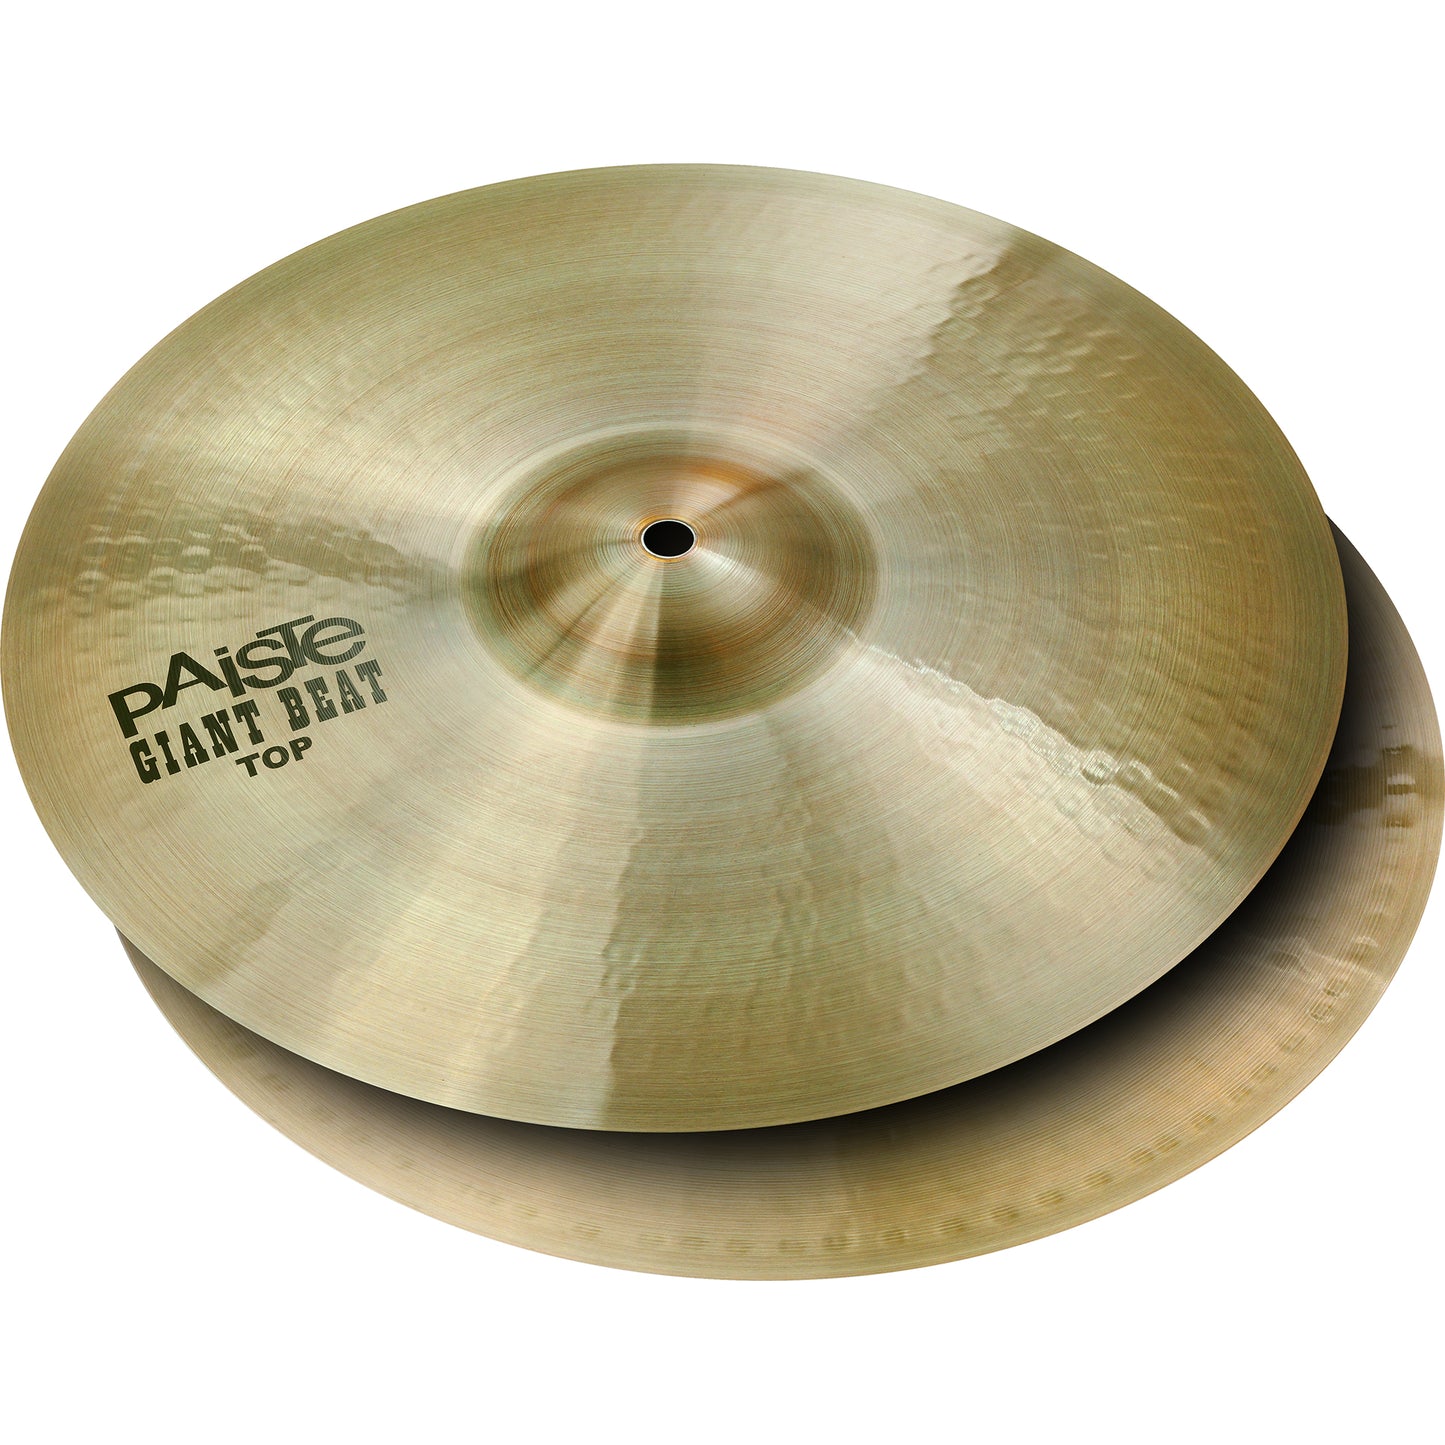 Paiste 15” Giant Beat Hi-Hat Cymbals